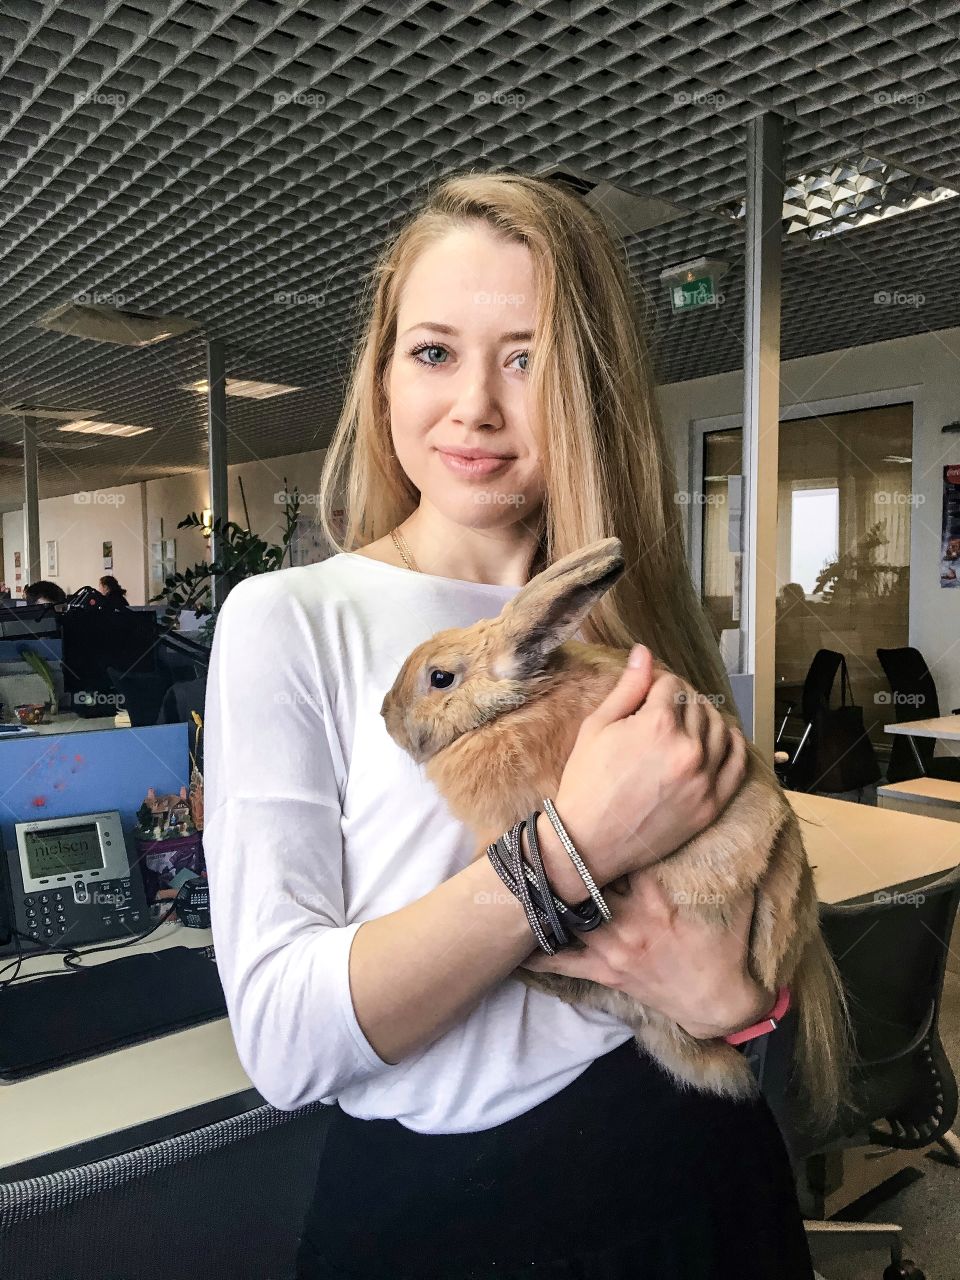 Girl hugging fluffy rabbit in office 